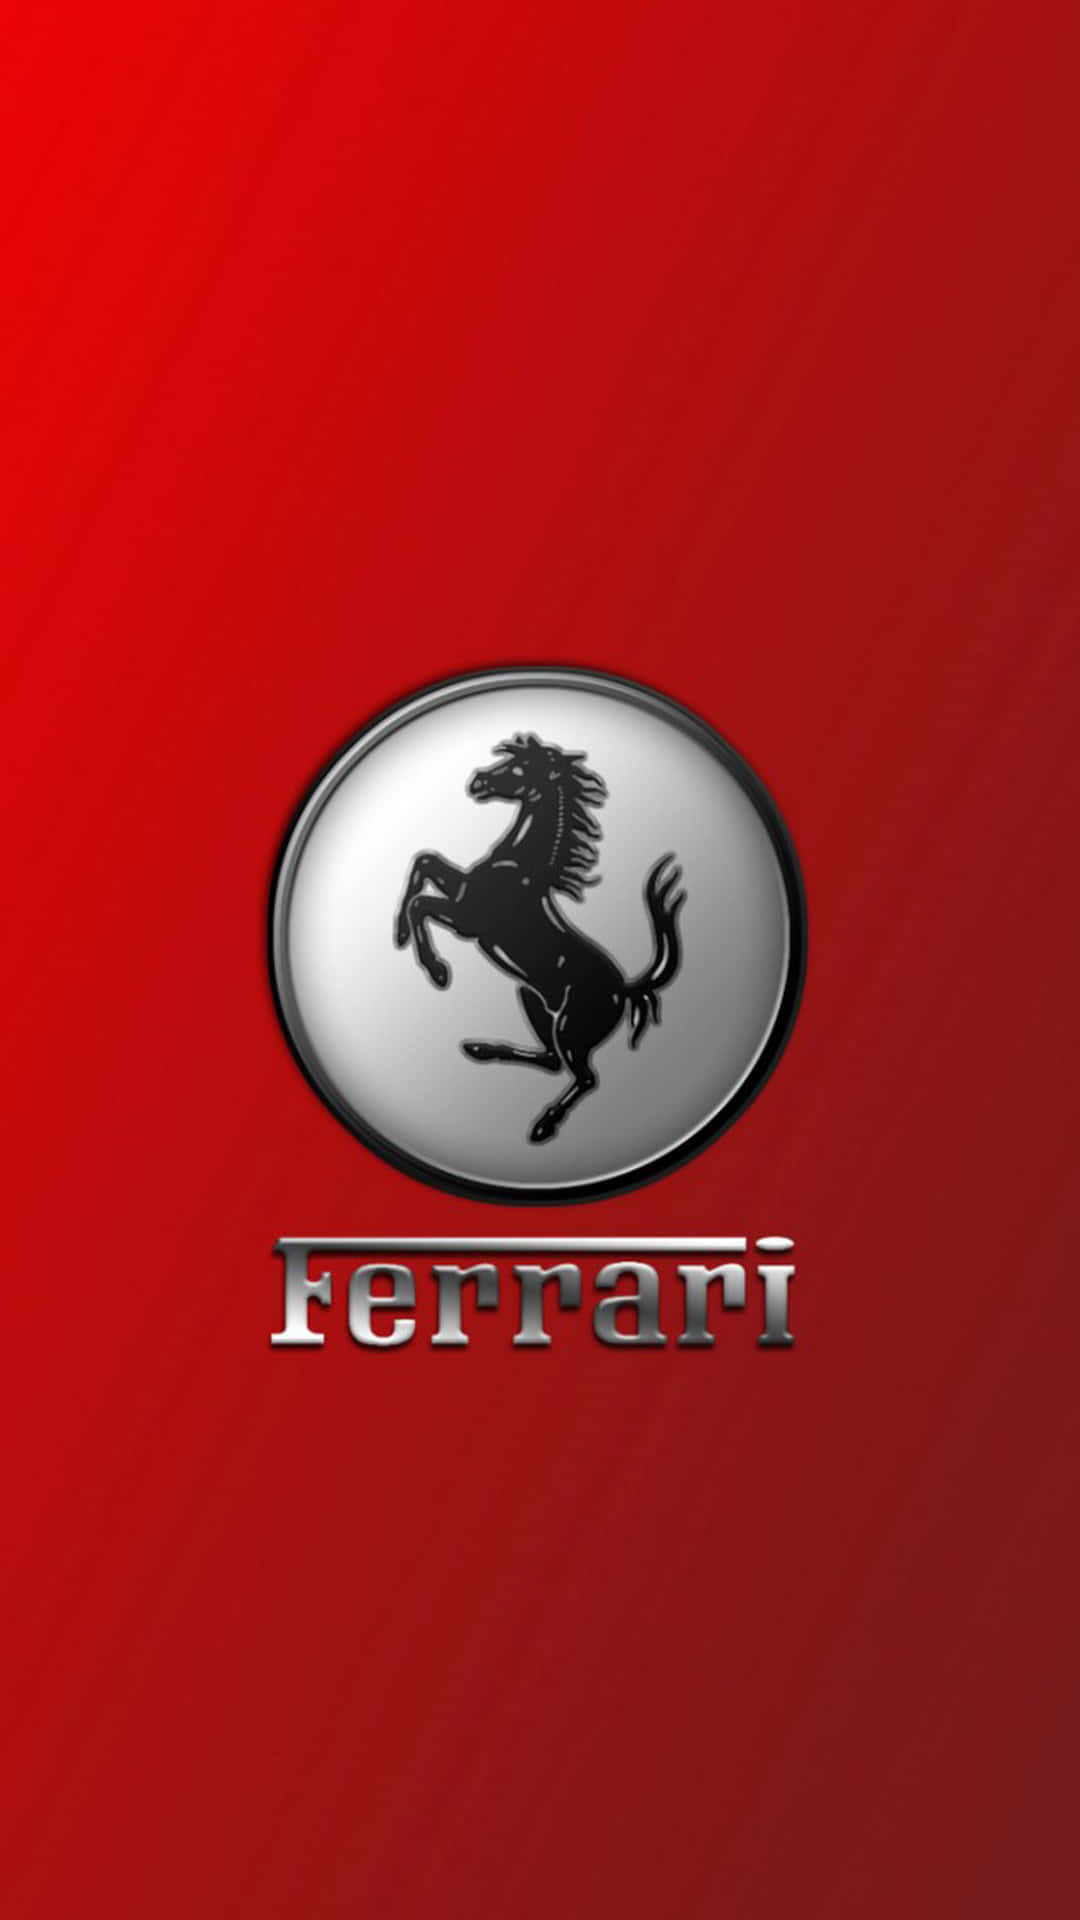 Ferrari Iphone X 1080 X 1920 Wallpaper